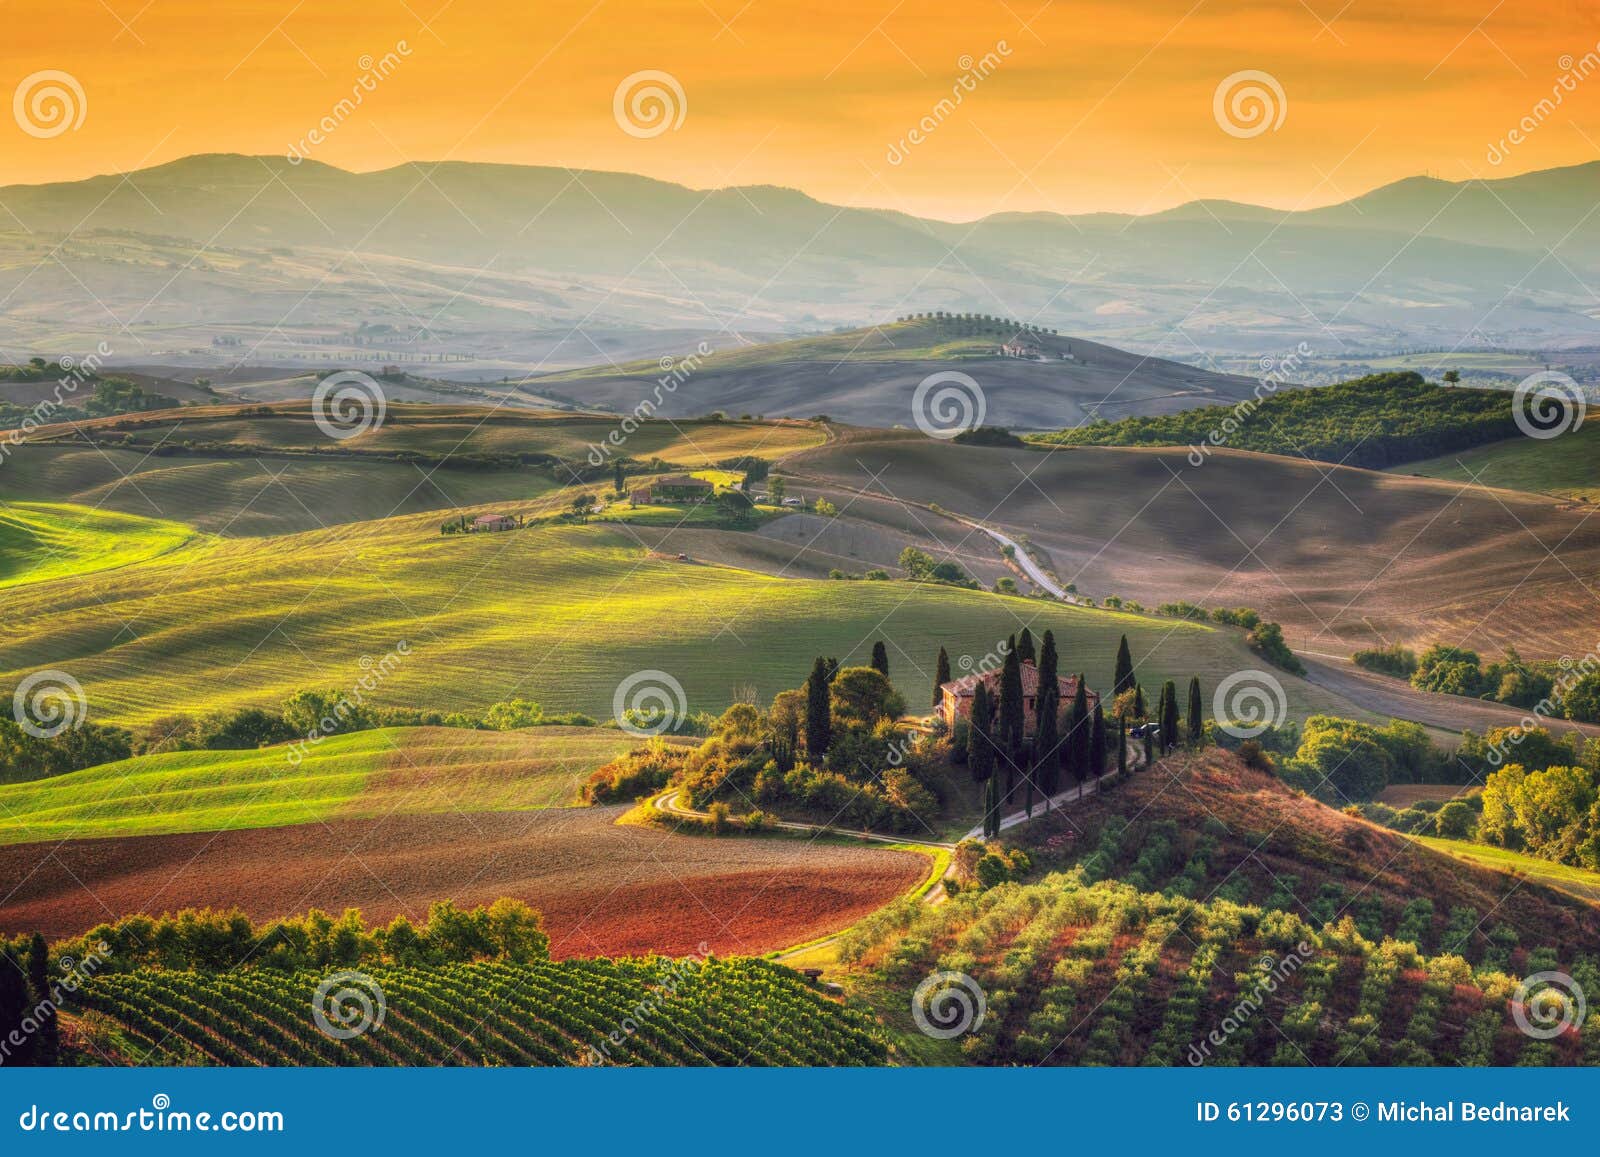 tuscany landscape at sunrise. tuscan farm house, vineyard, hills.